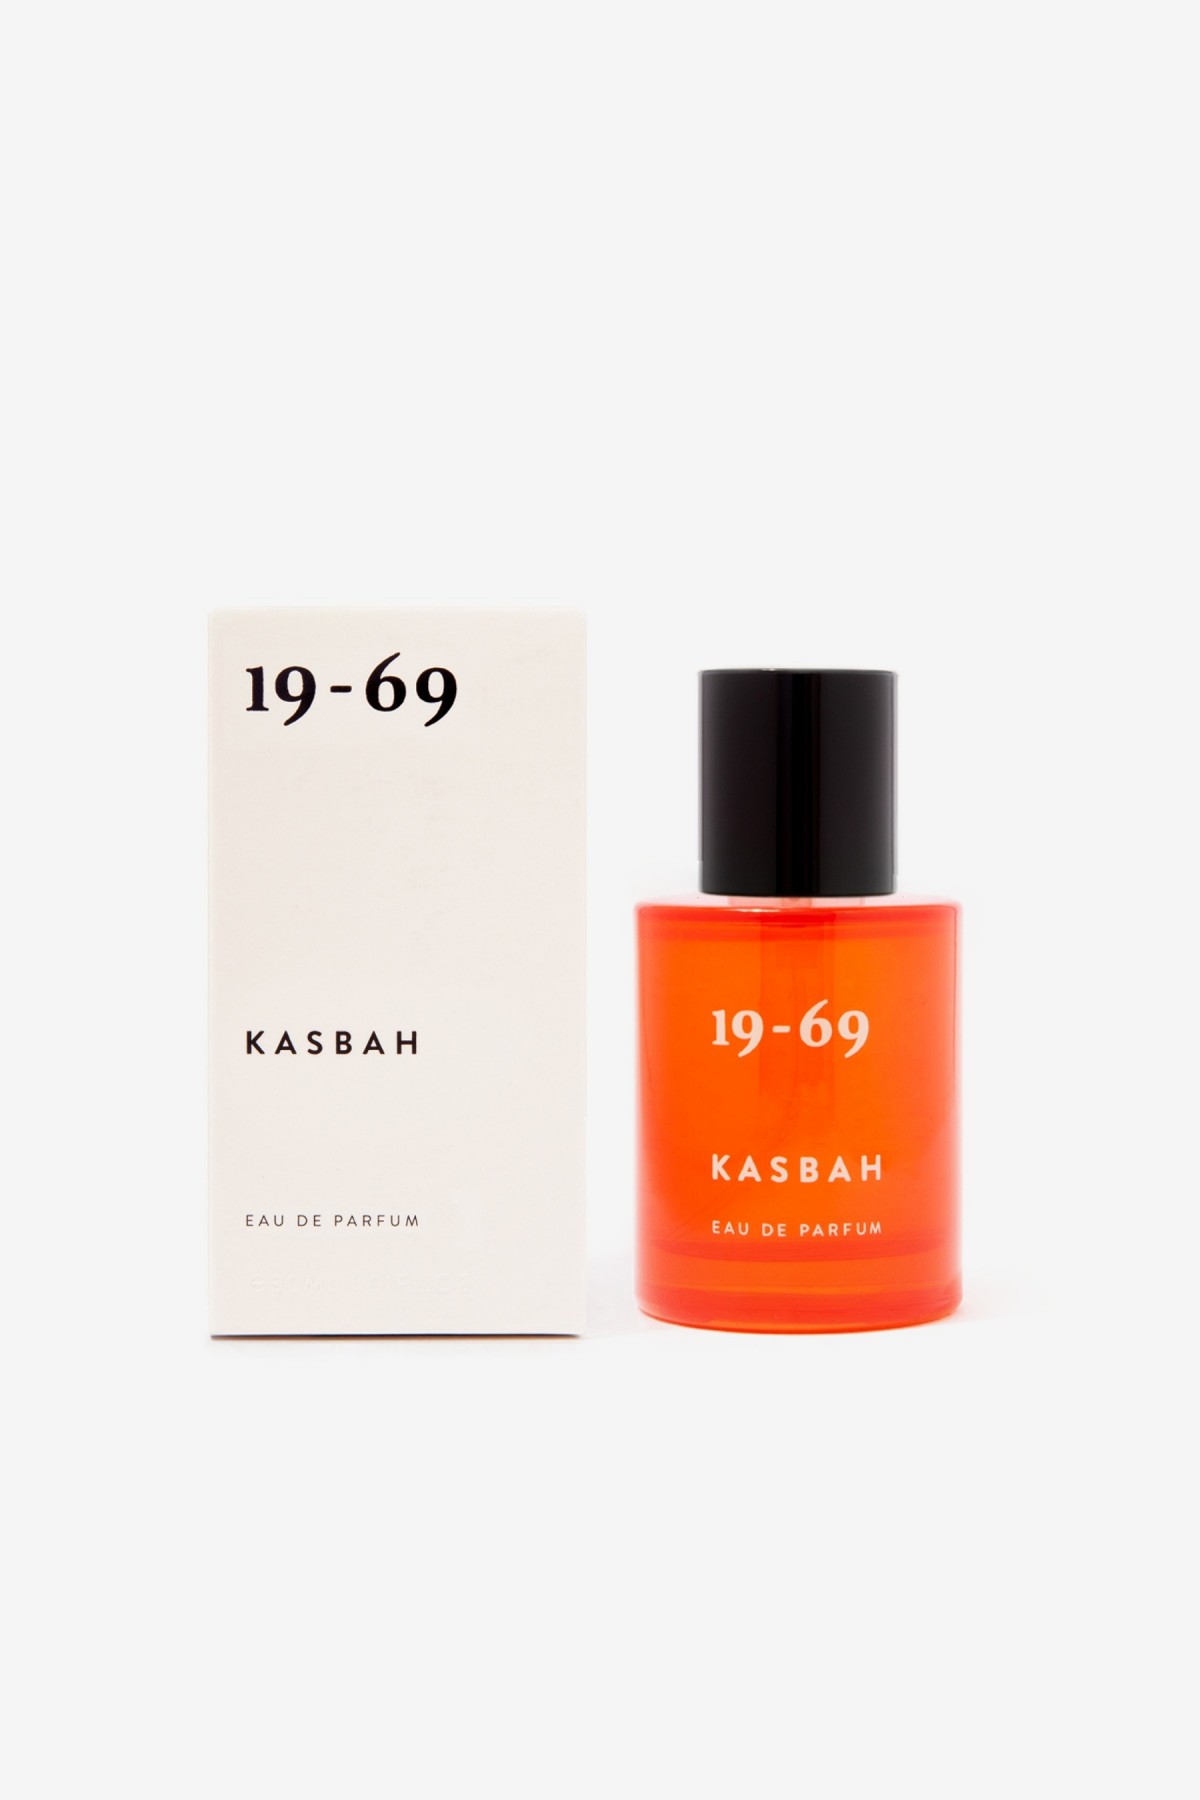 19-69 Kasbah Eau de Parfum in 30ml